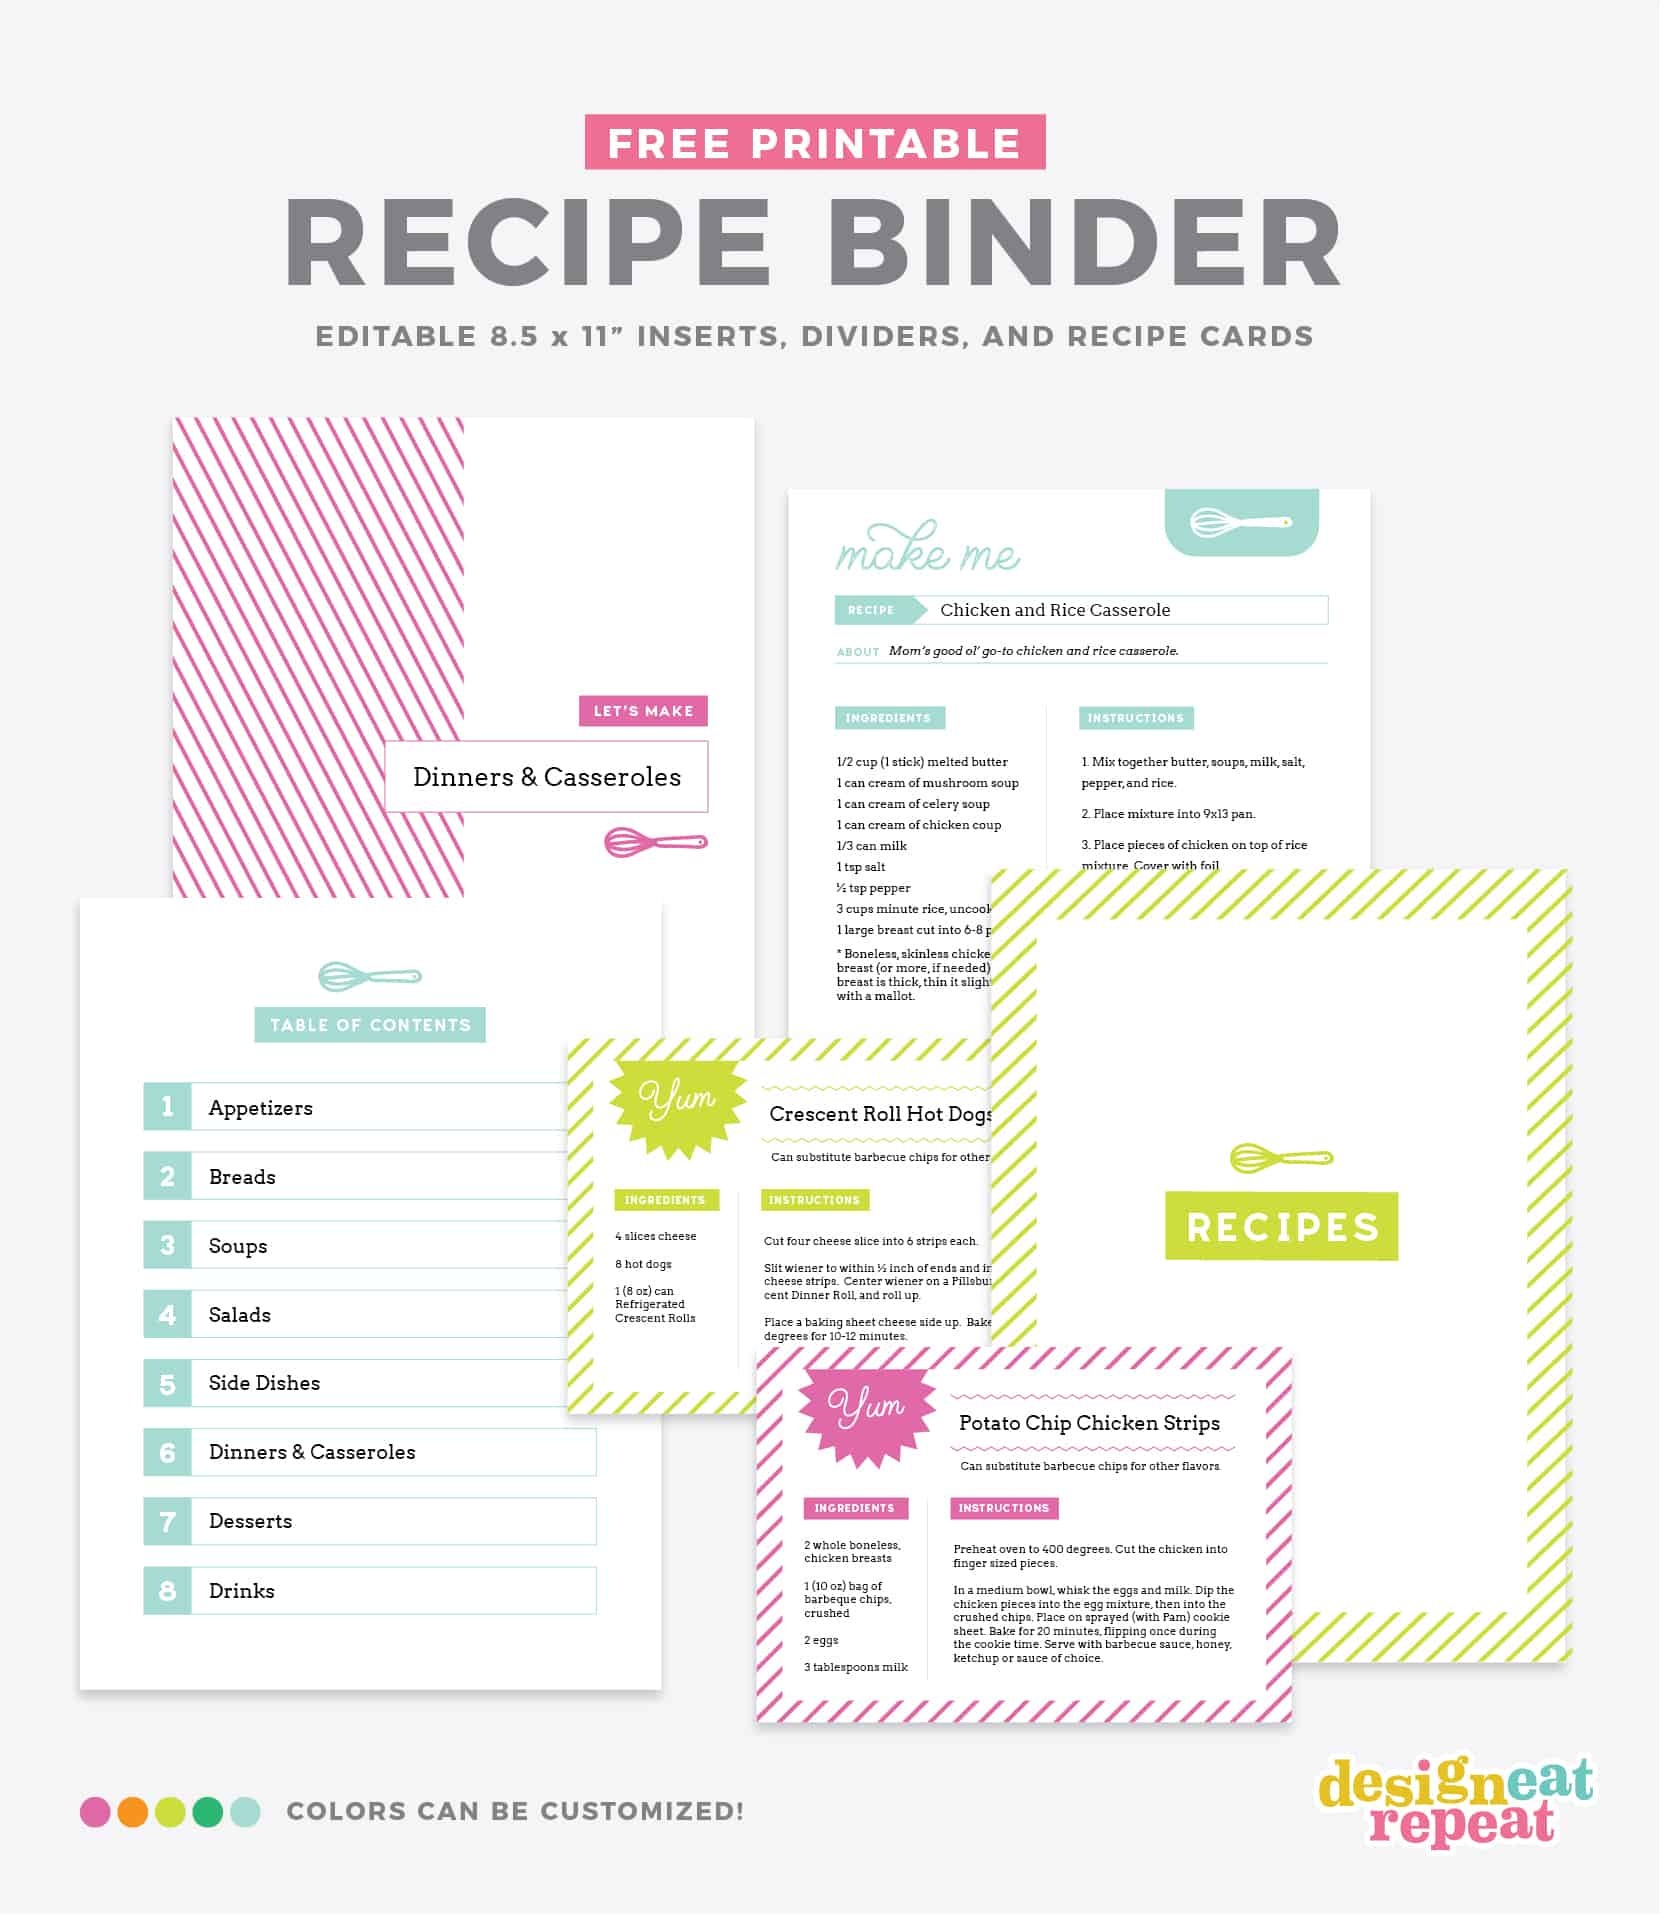 Diy Recipe Book (With Free Printable Recipe Binder Kit!) - Free Printable Recipe Dividers